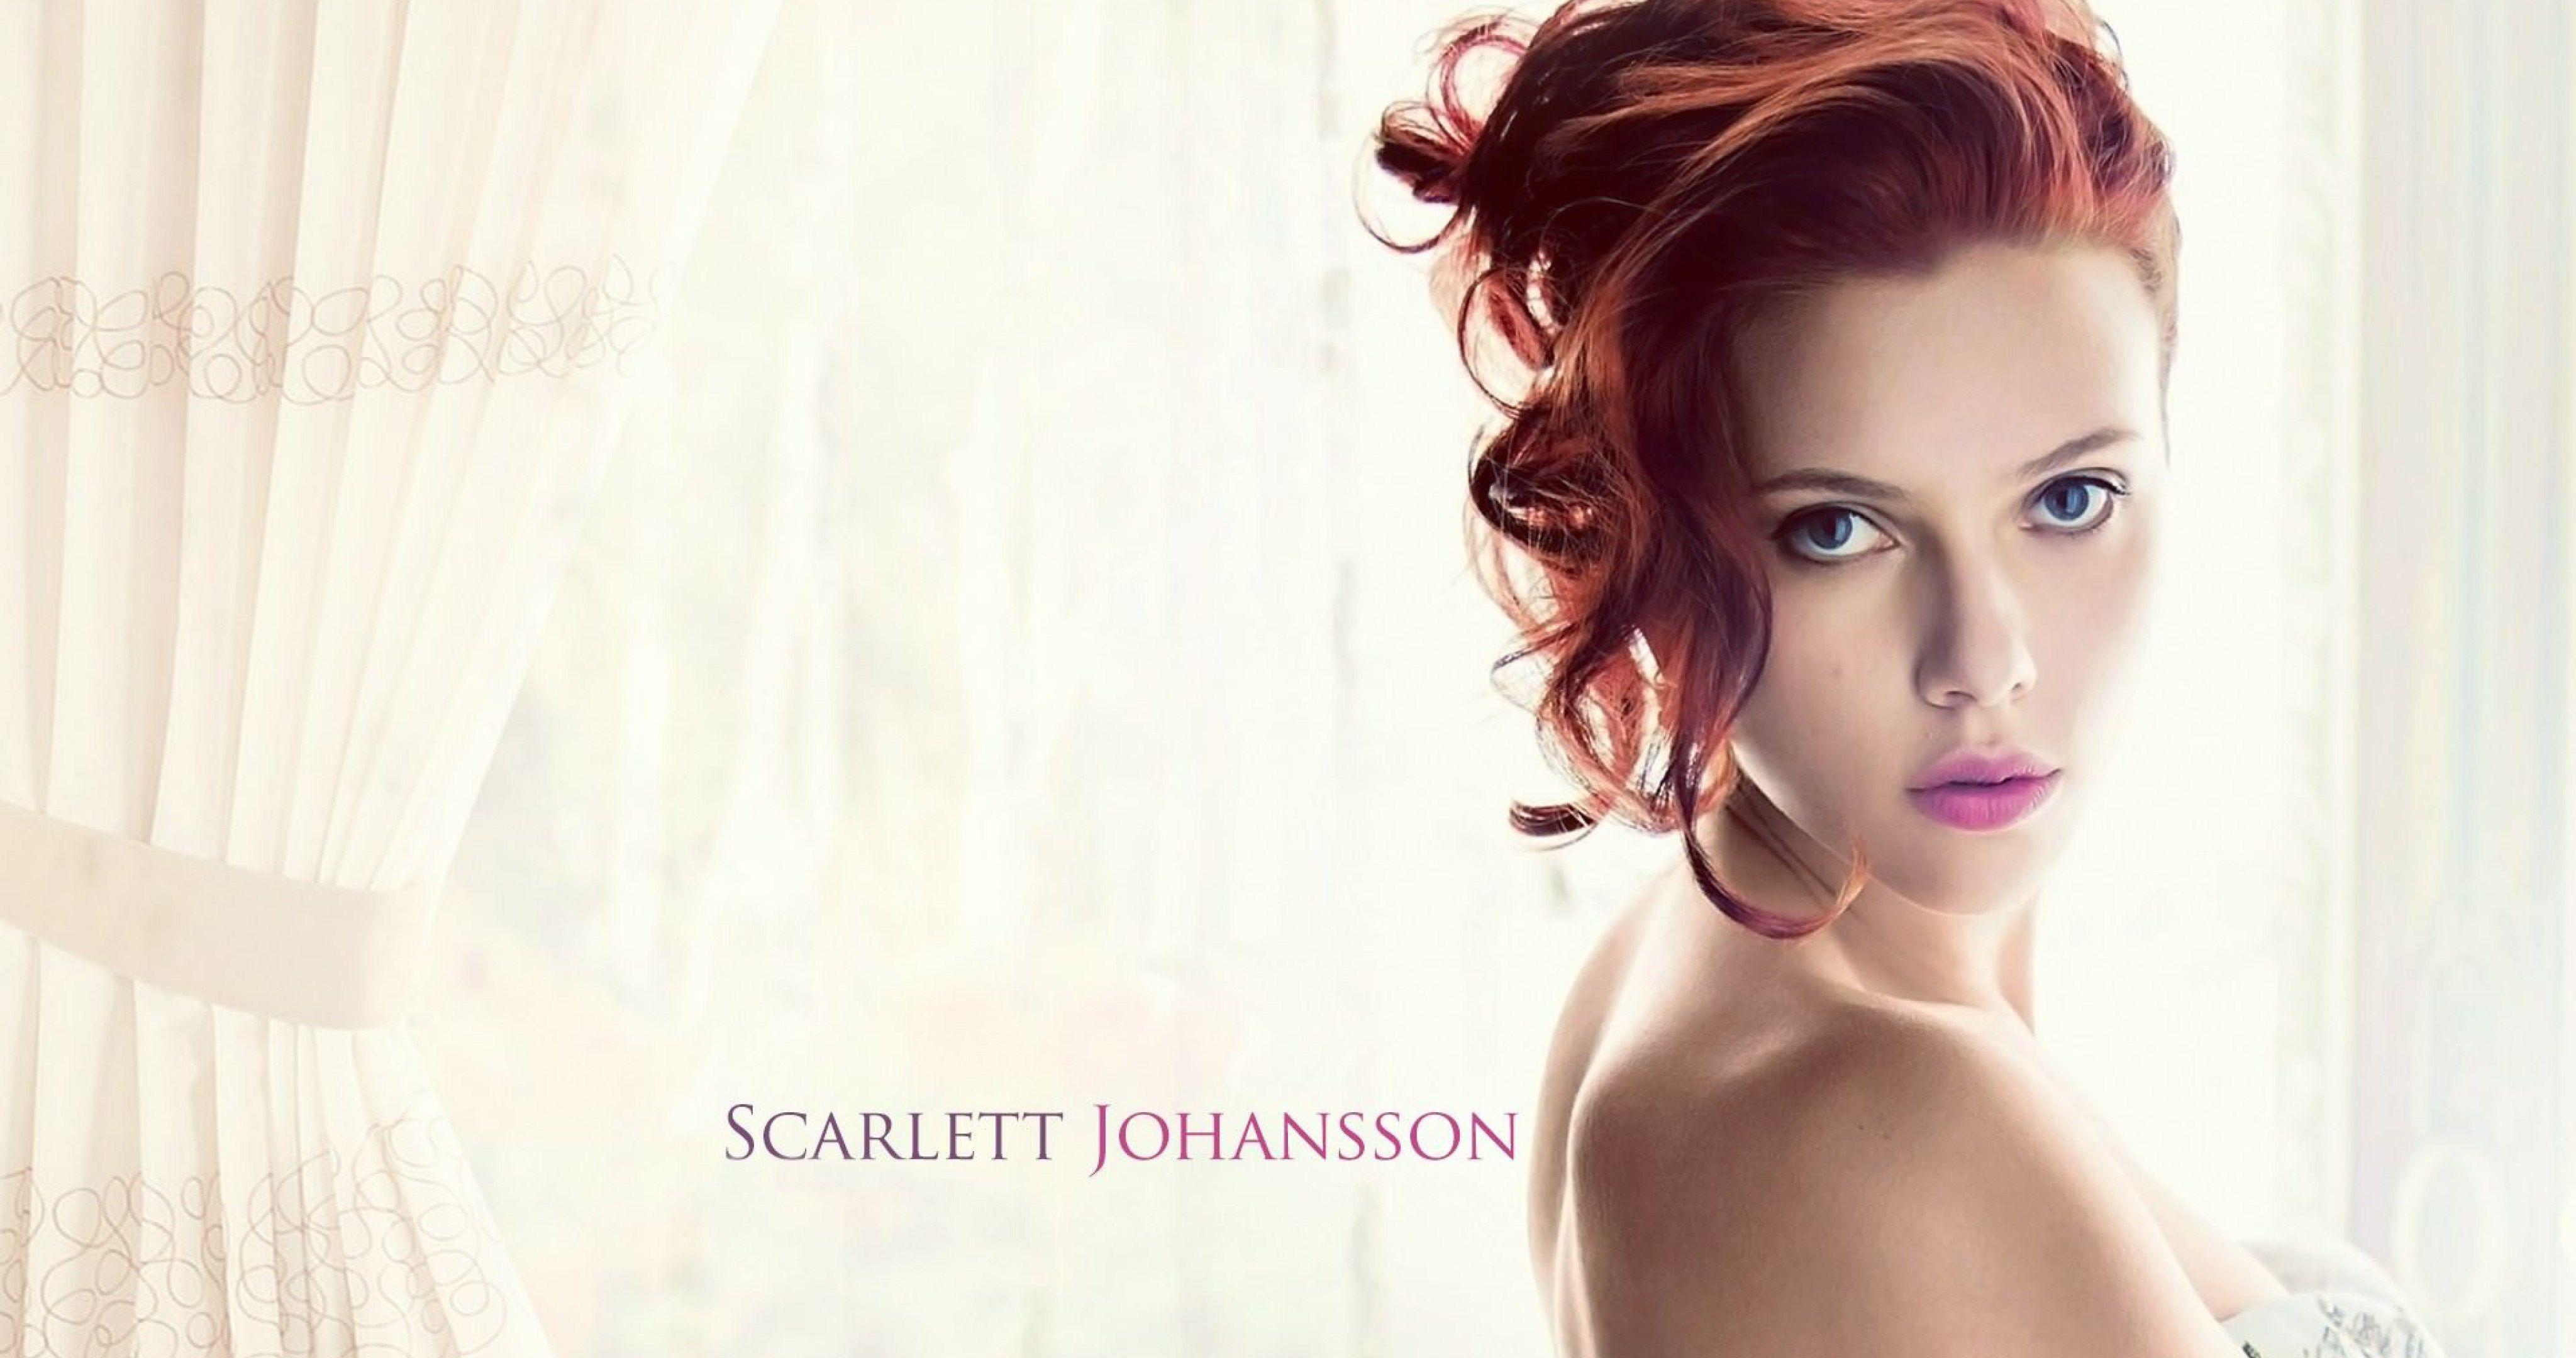 scarlett johanssson 4k ultra HD wallpaper. Scarlett